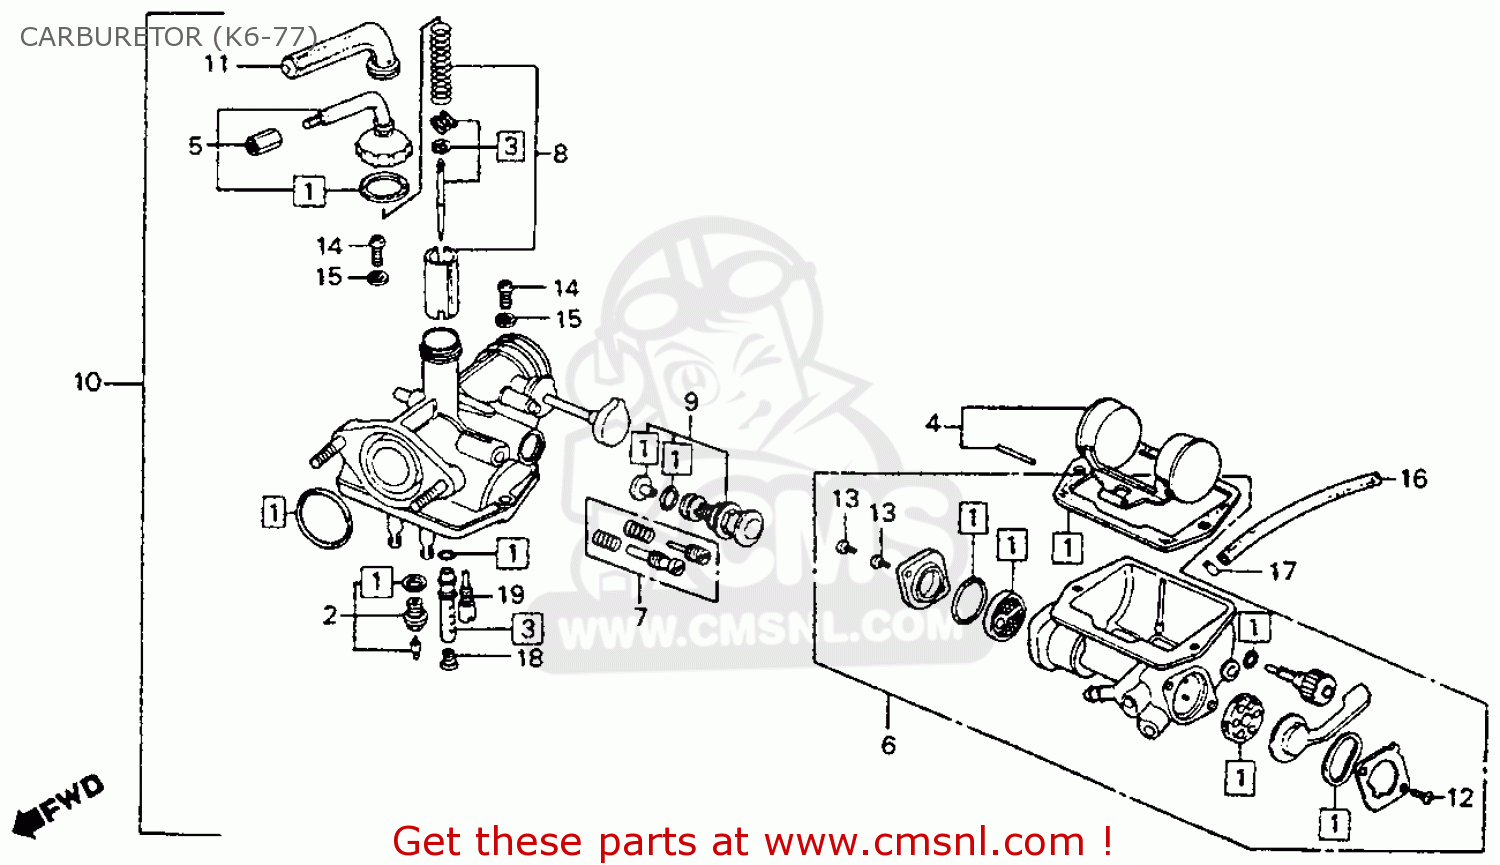 Honda c70 carburetor adjustment #7